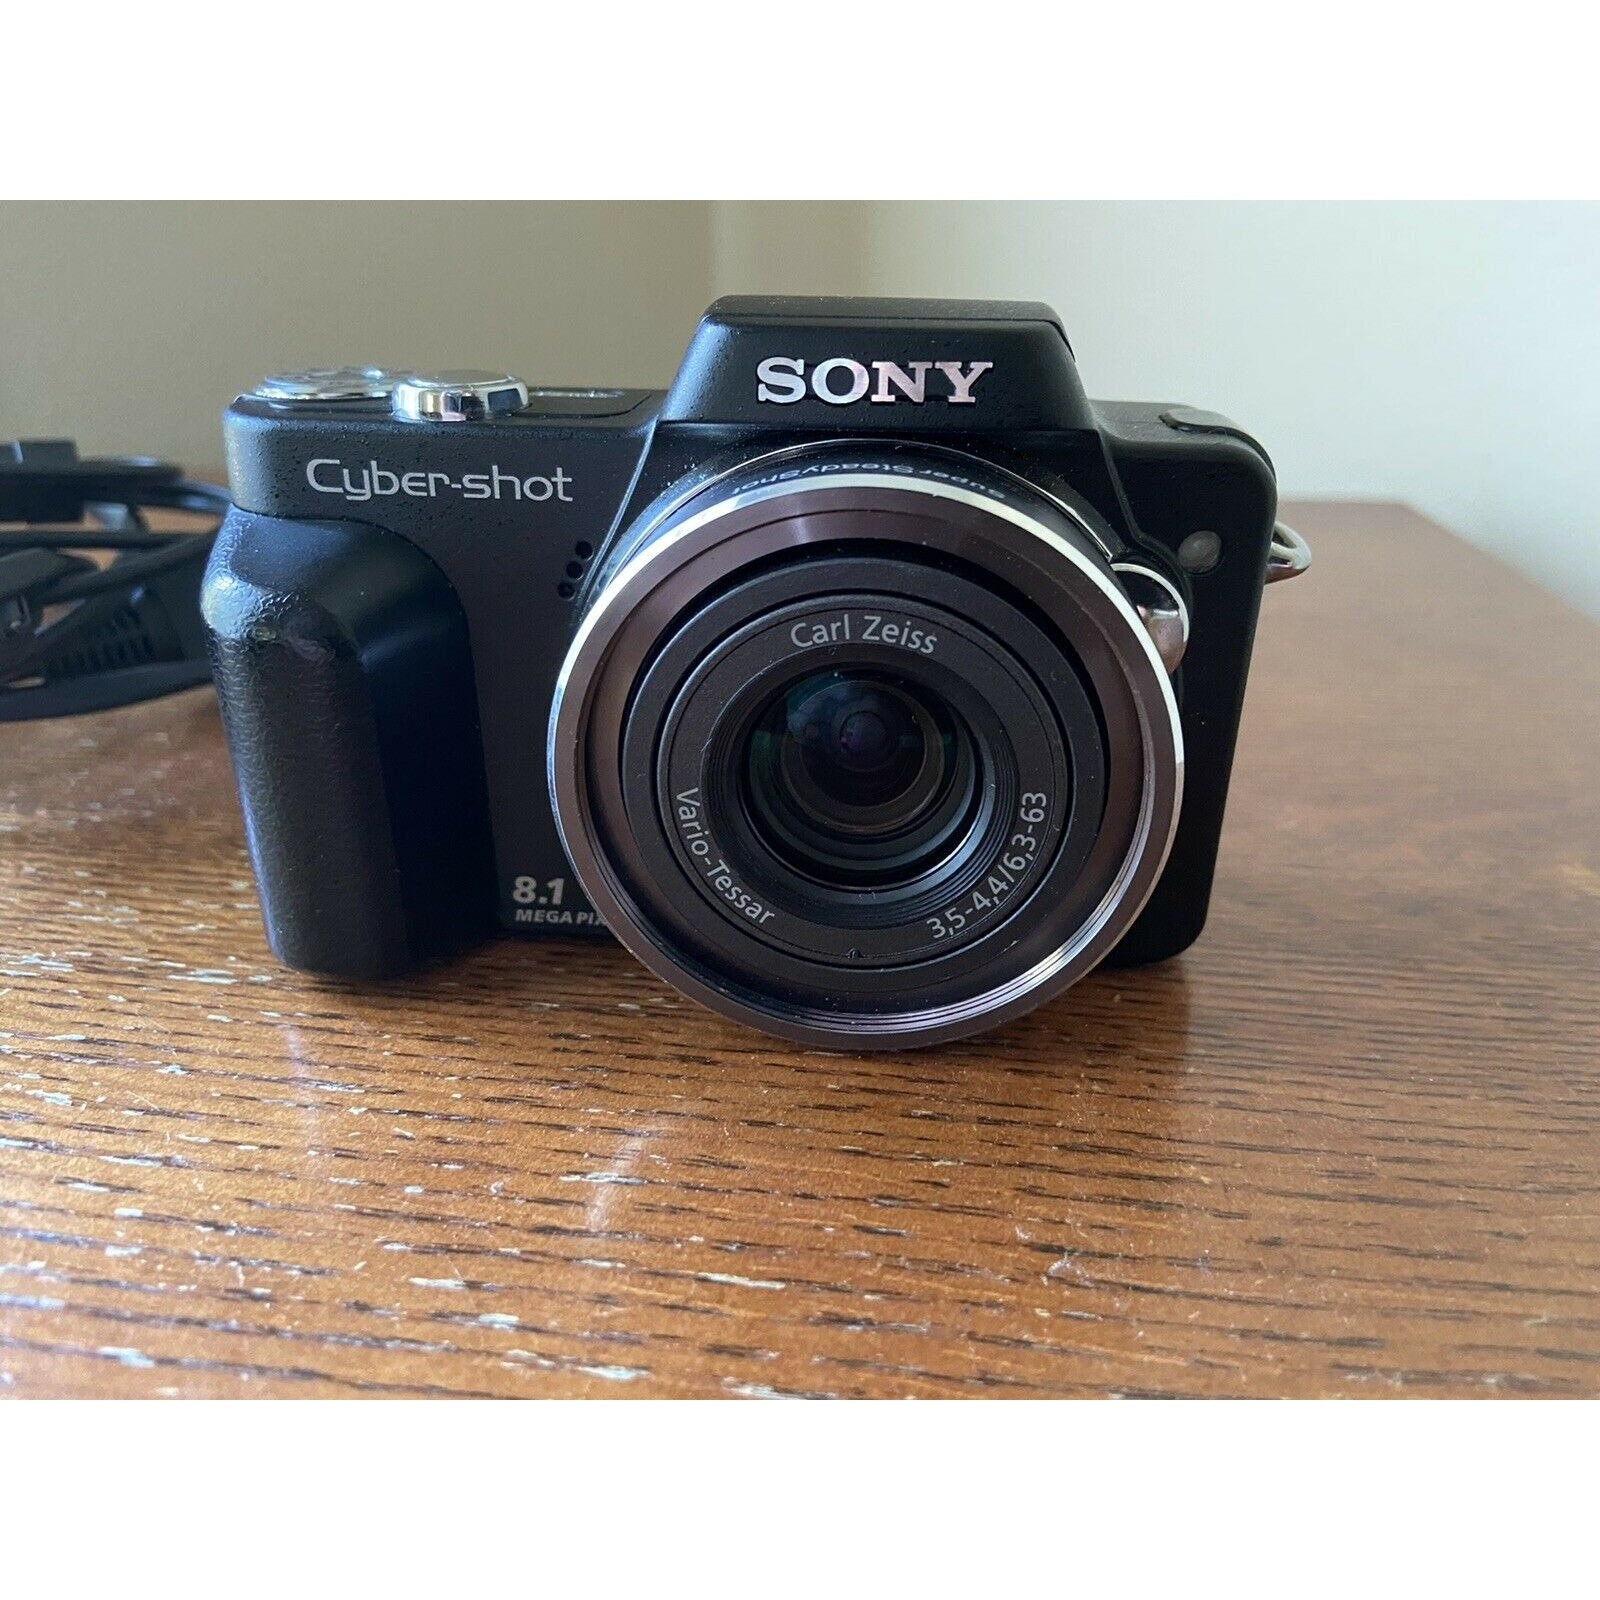 Sony Cyber-shot DSC-H3 8.1 MP Digital Camera